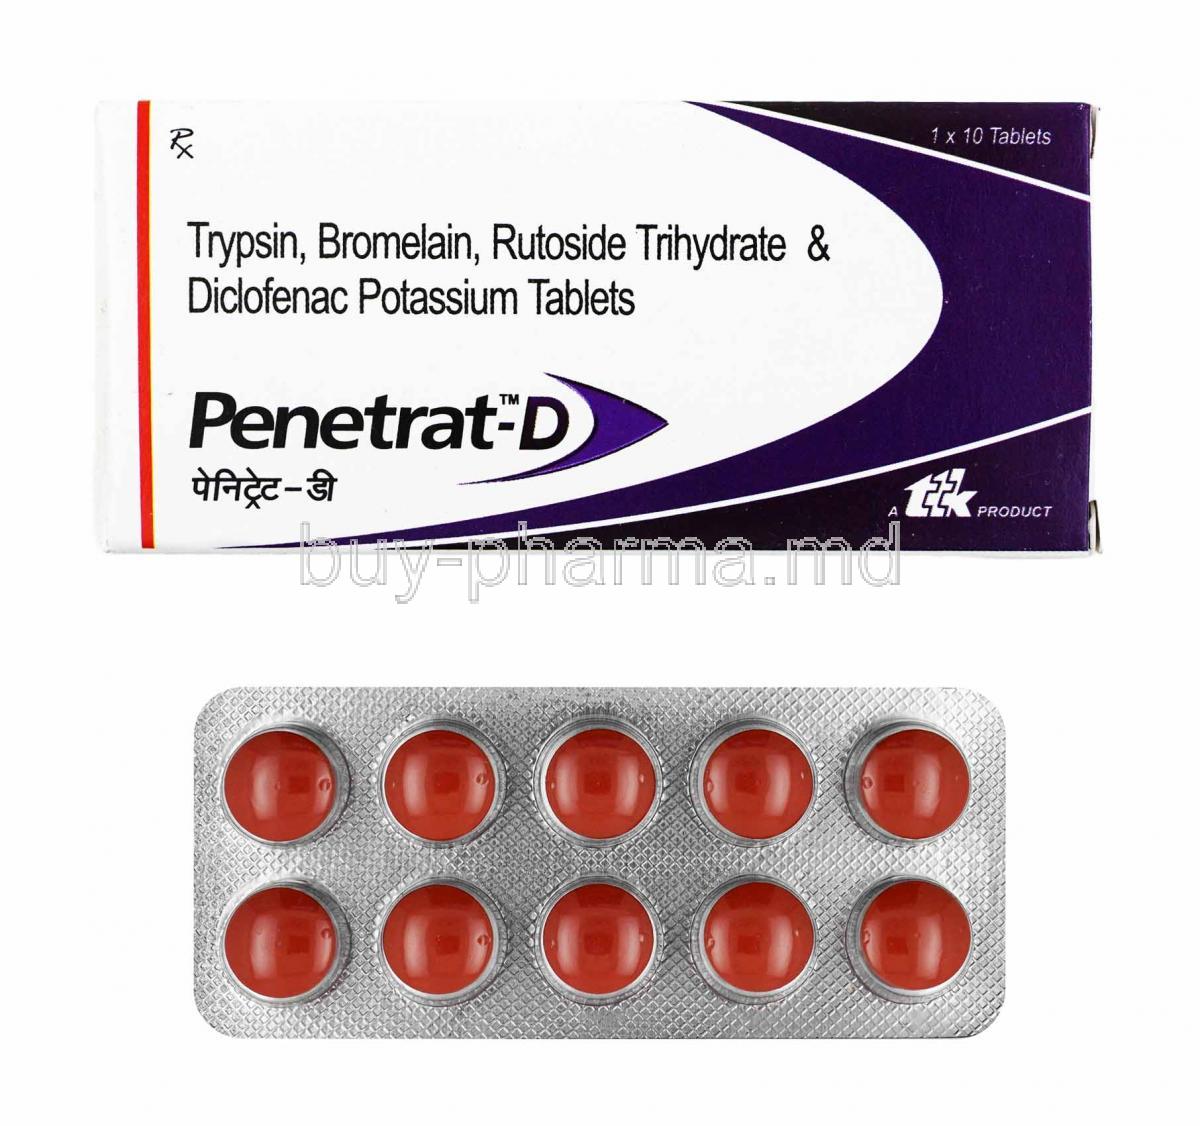 Penetrat-D, Trypsin, Bromelain, Rutoside and Diclofenac box and tablets